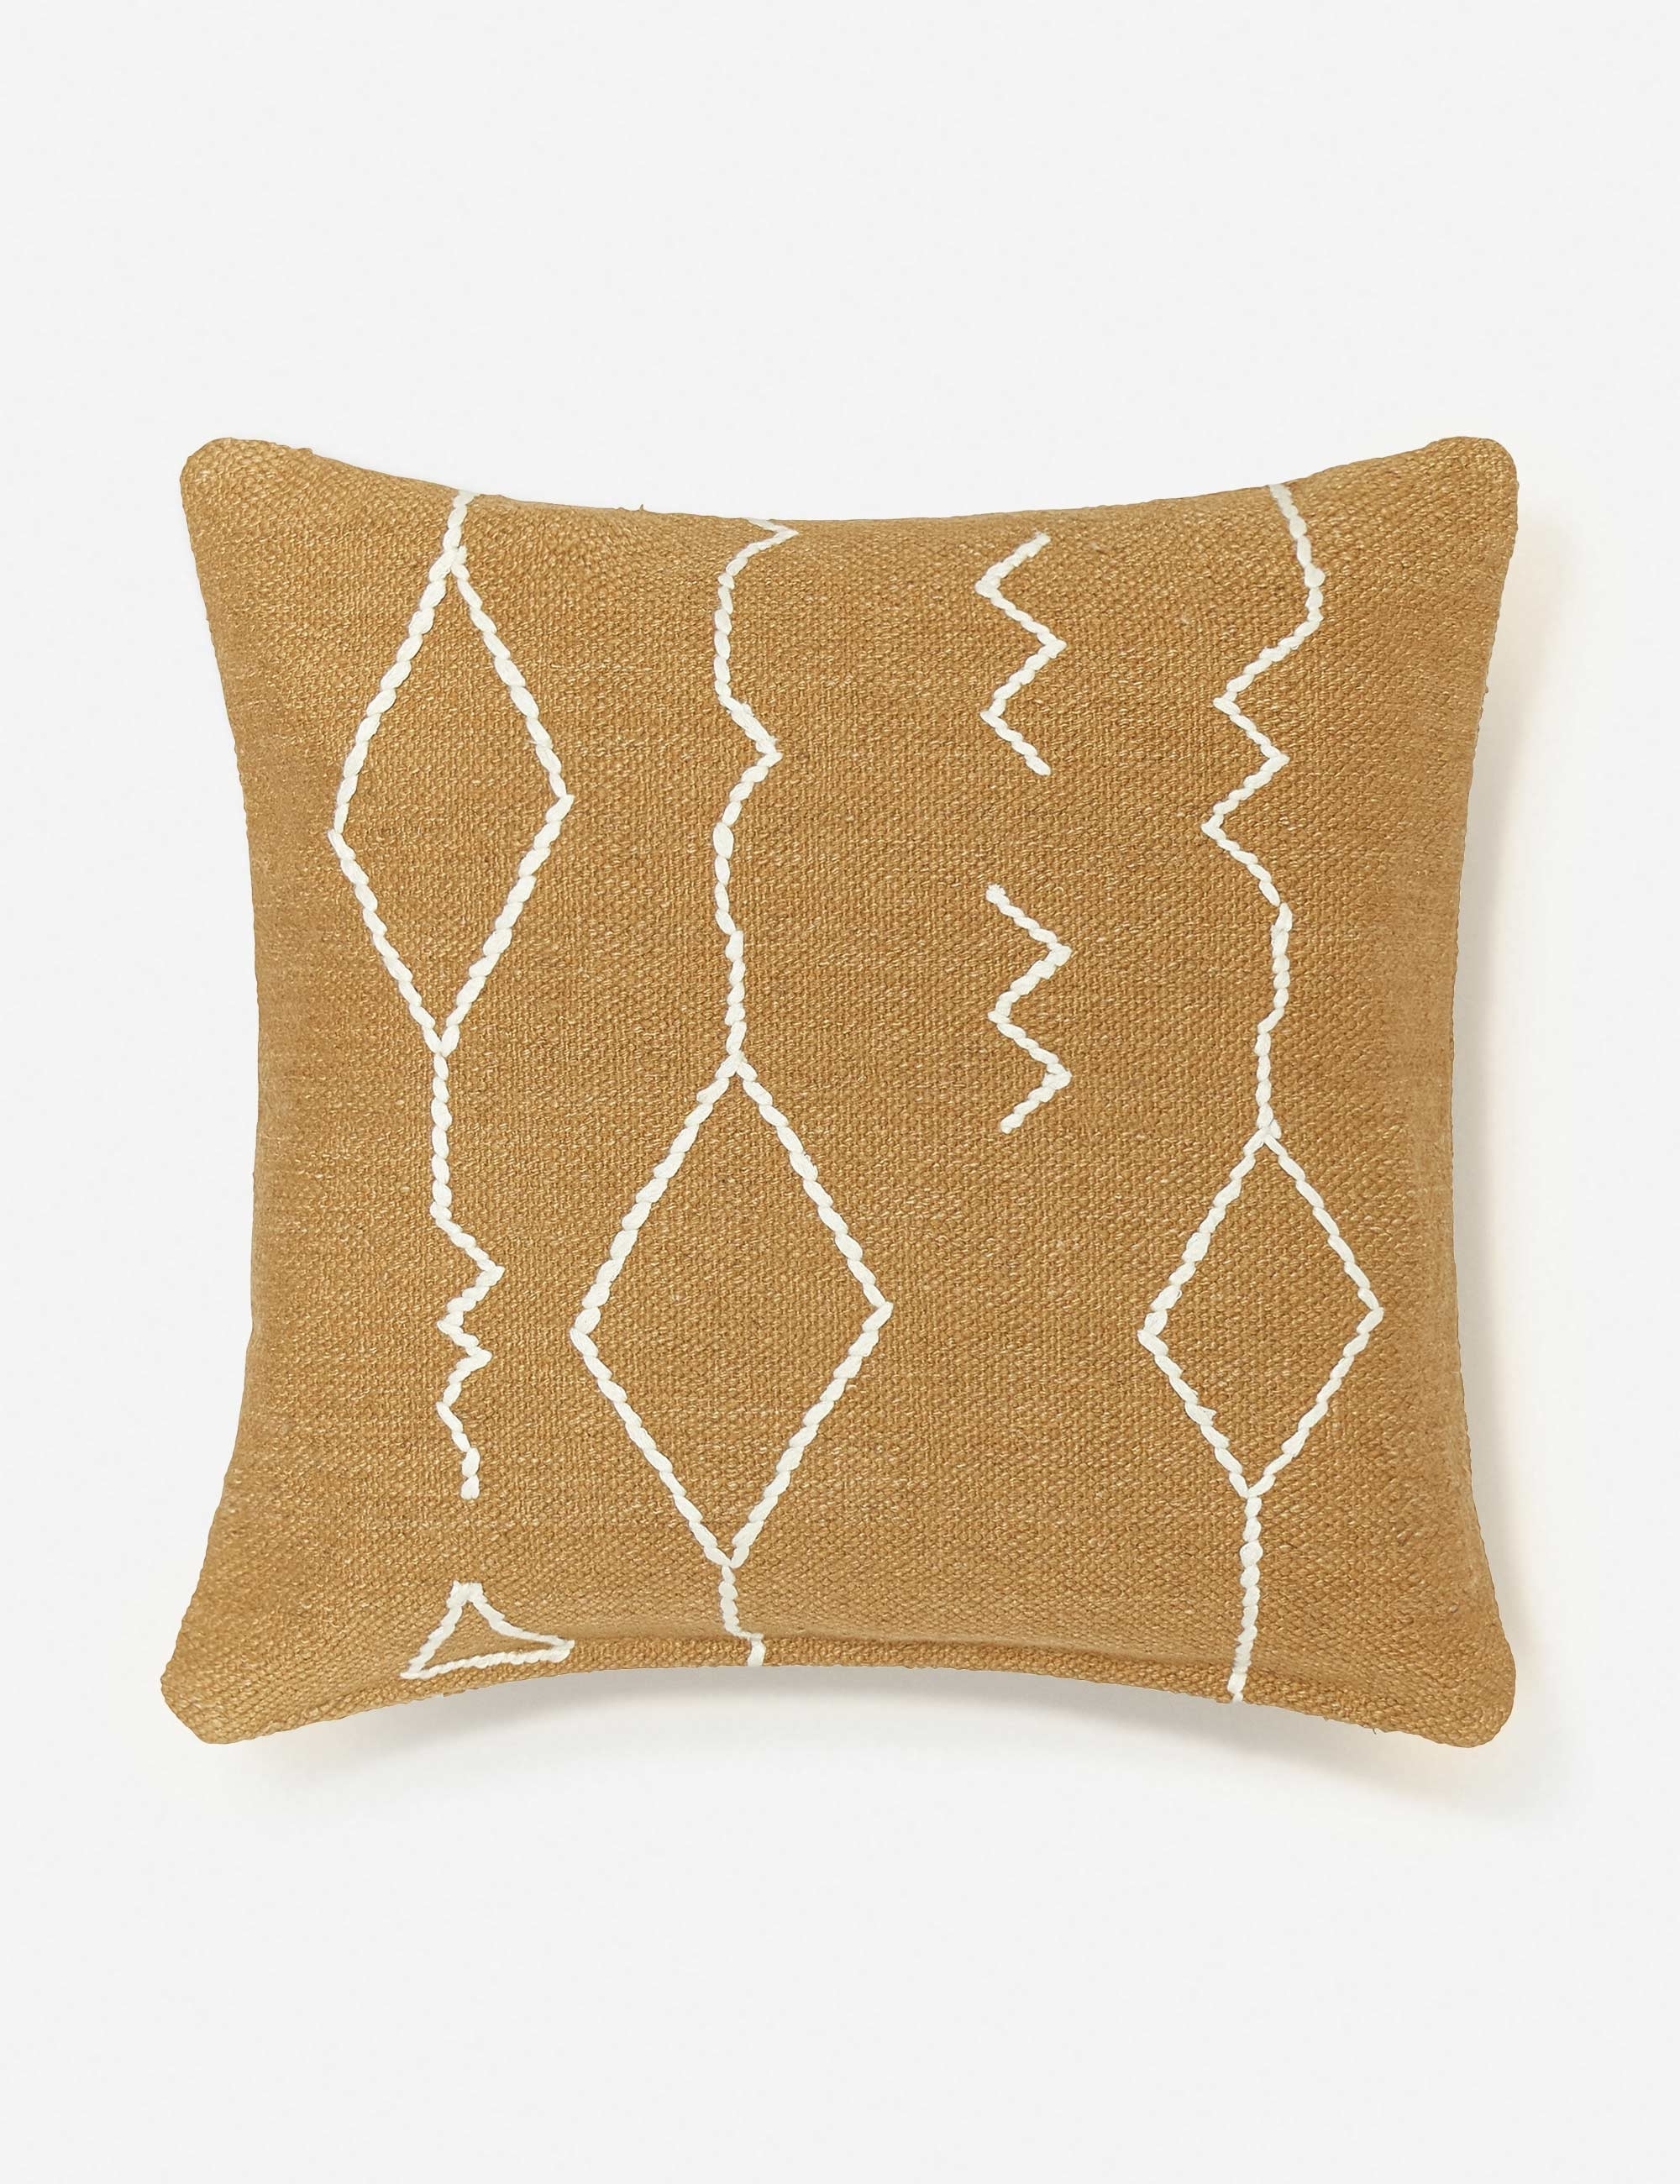 Moroccan Flatweave Pillow By Sarah Sherman Samuel, Ochre, 20" x 20" - Image 0